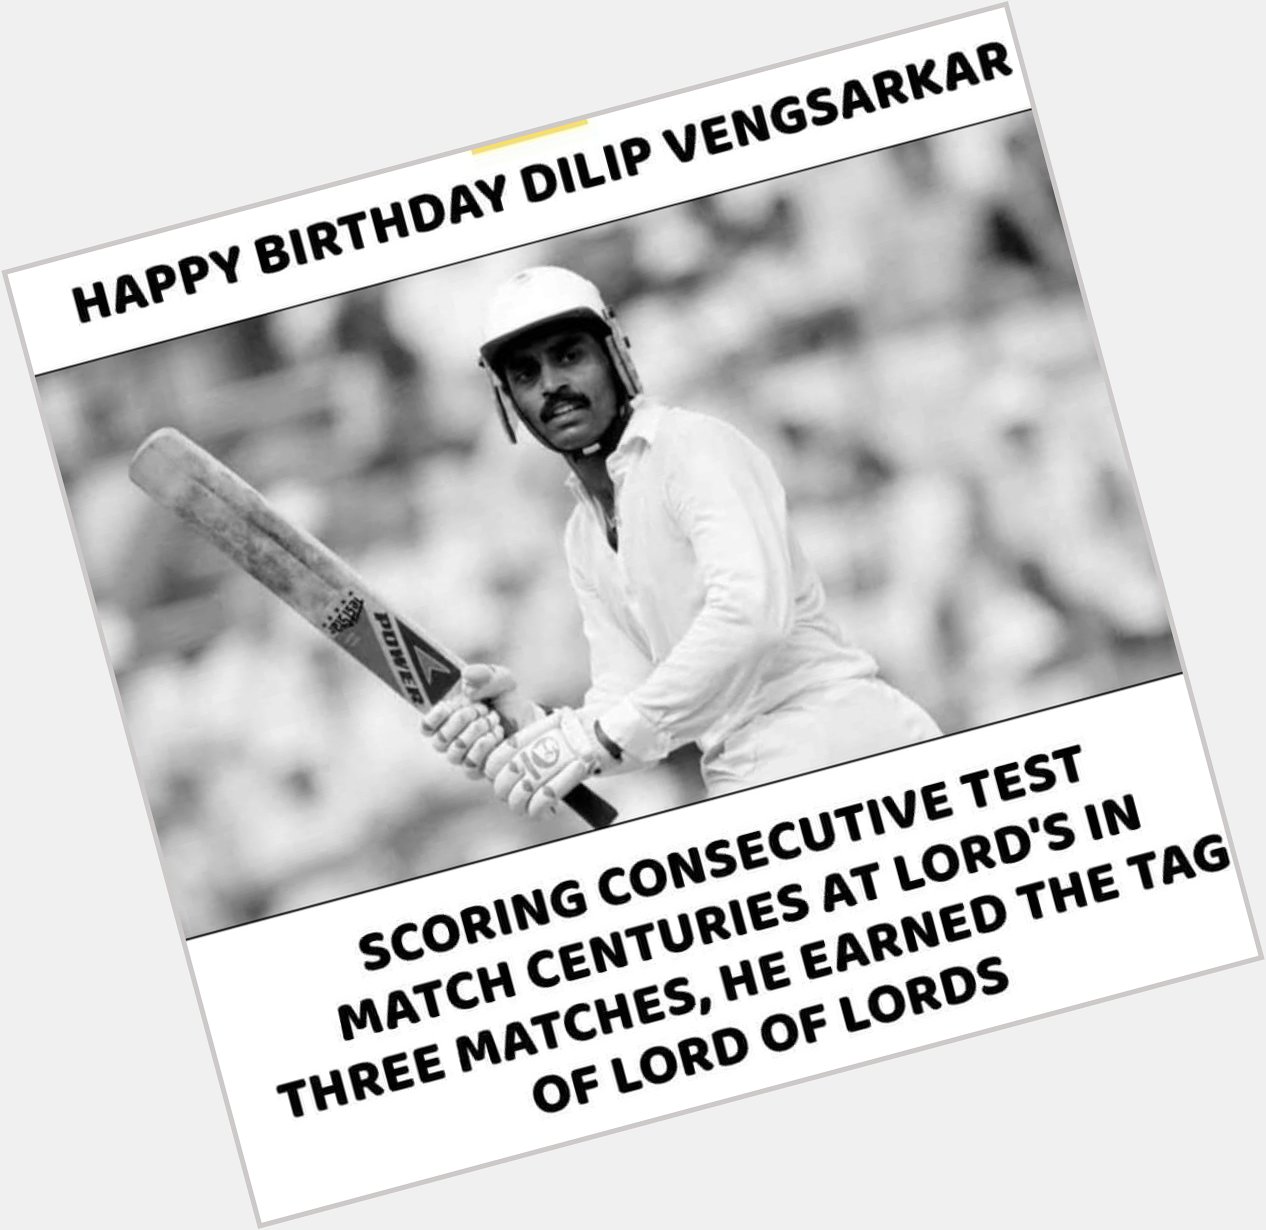 Happy Birthday Dilip Vengsarkar! 